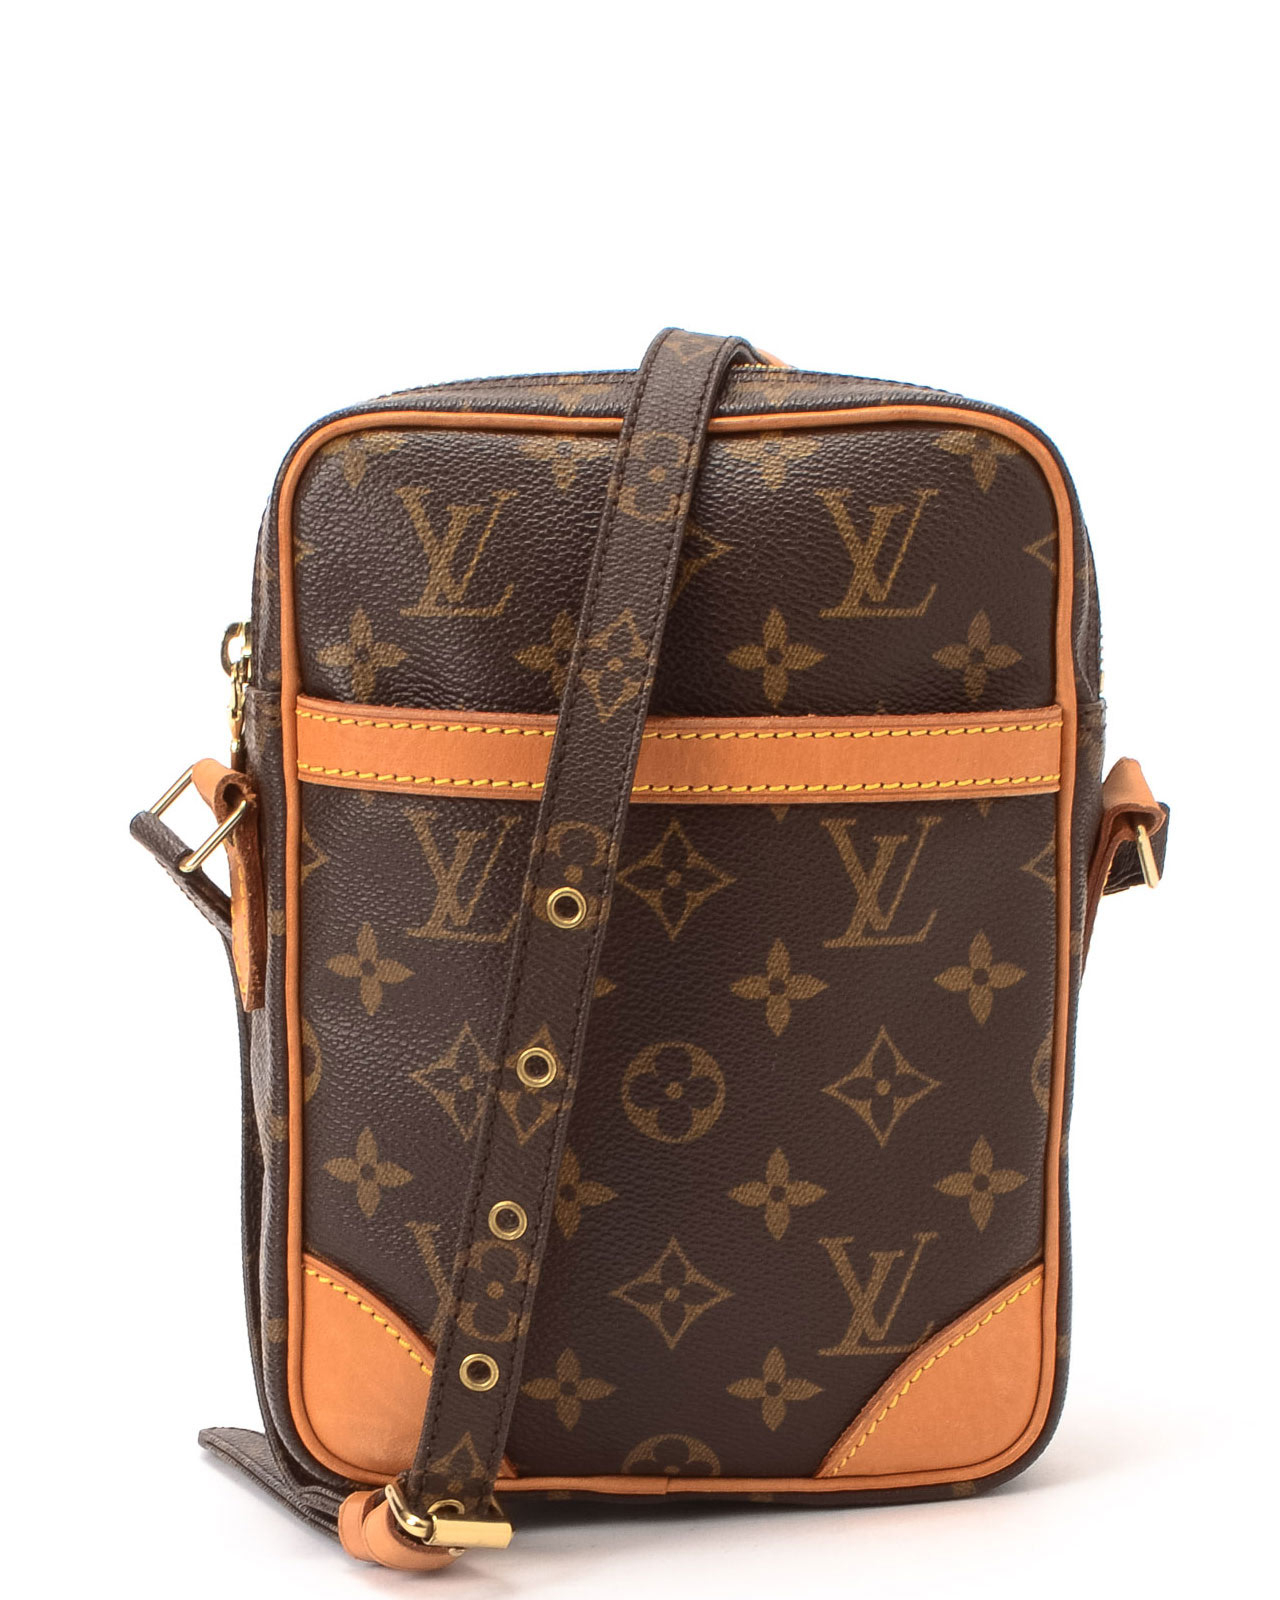 Lyst - Louis Vuitton Danube Messenger Bag in Brown